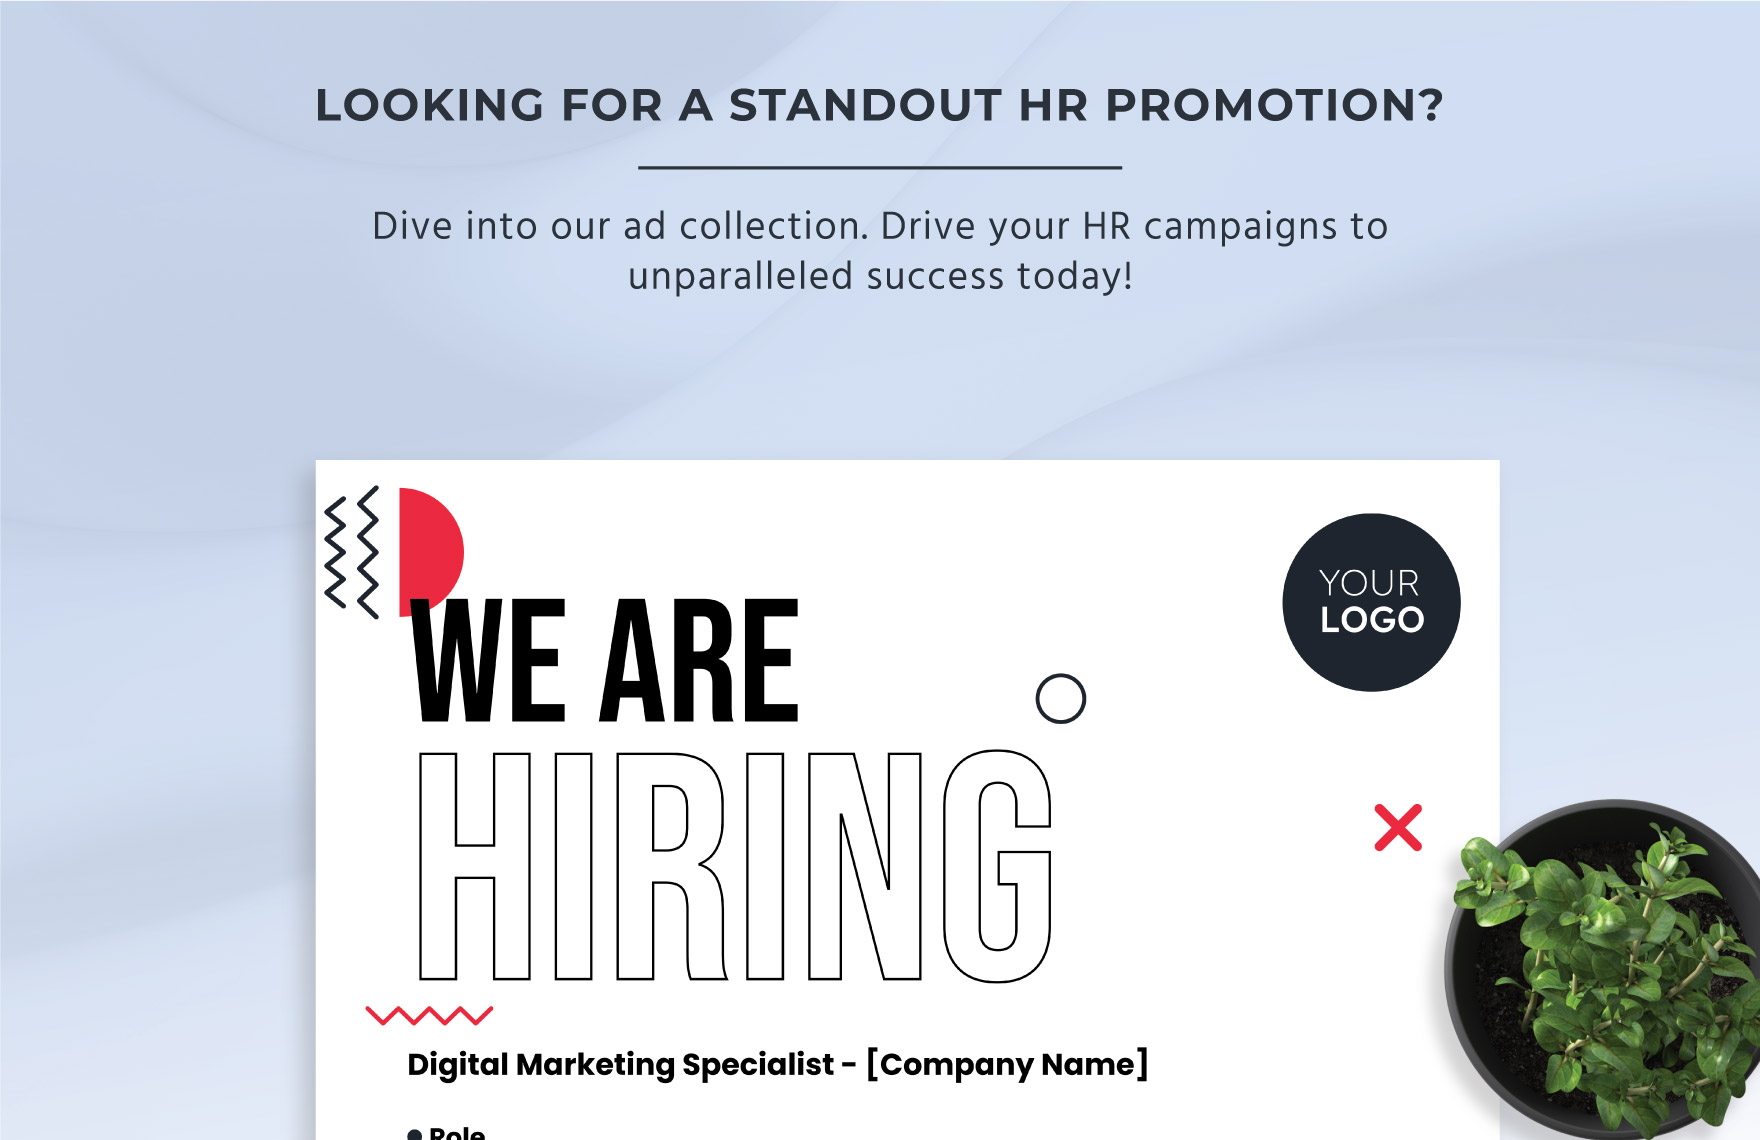 Digital Job Posting Ad HR Template